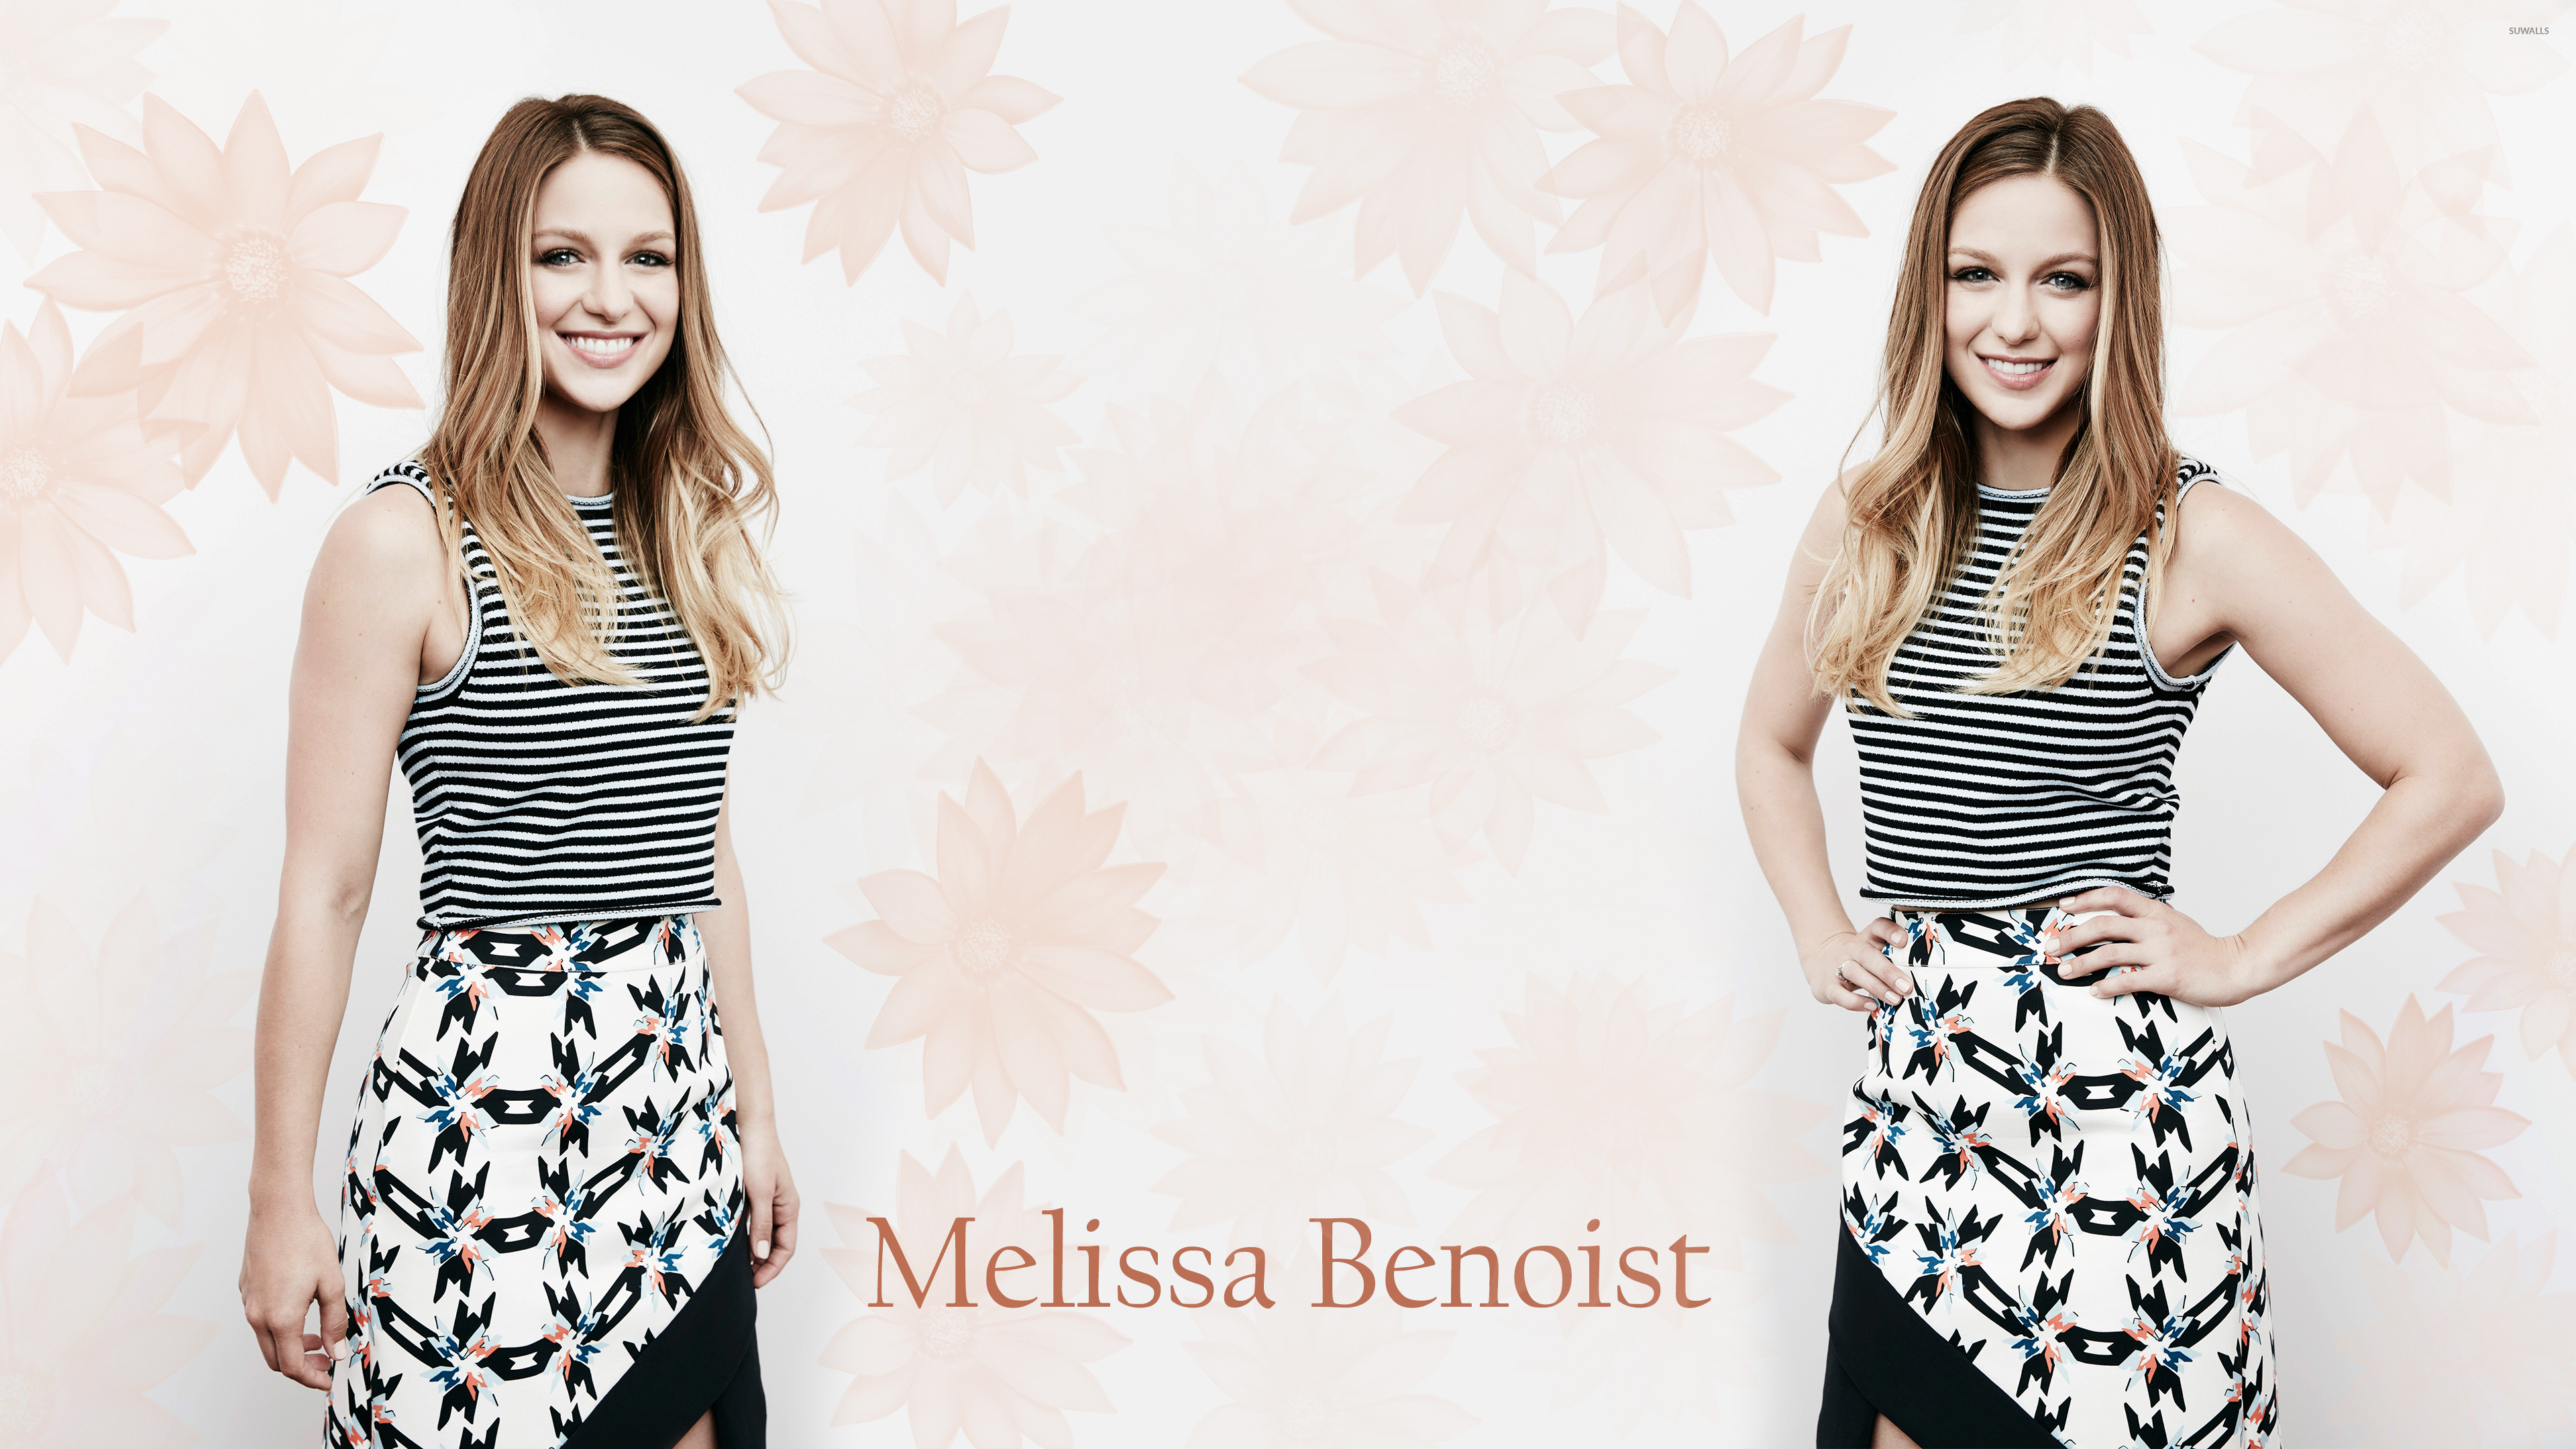 3840x2160 Melissa Benoist in a striped top wallpaper